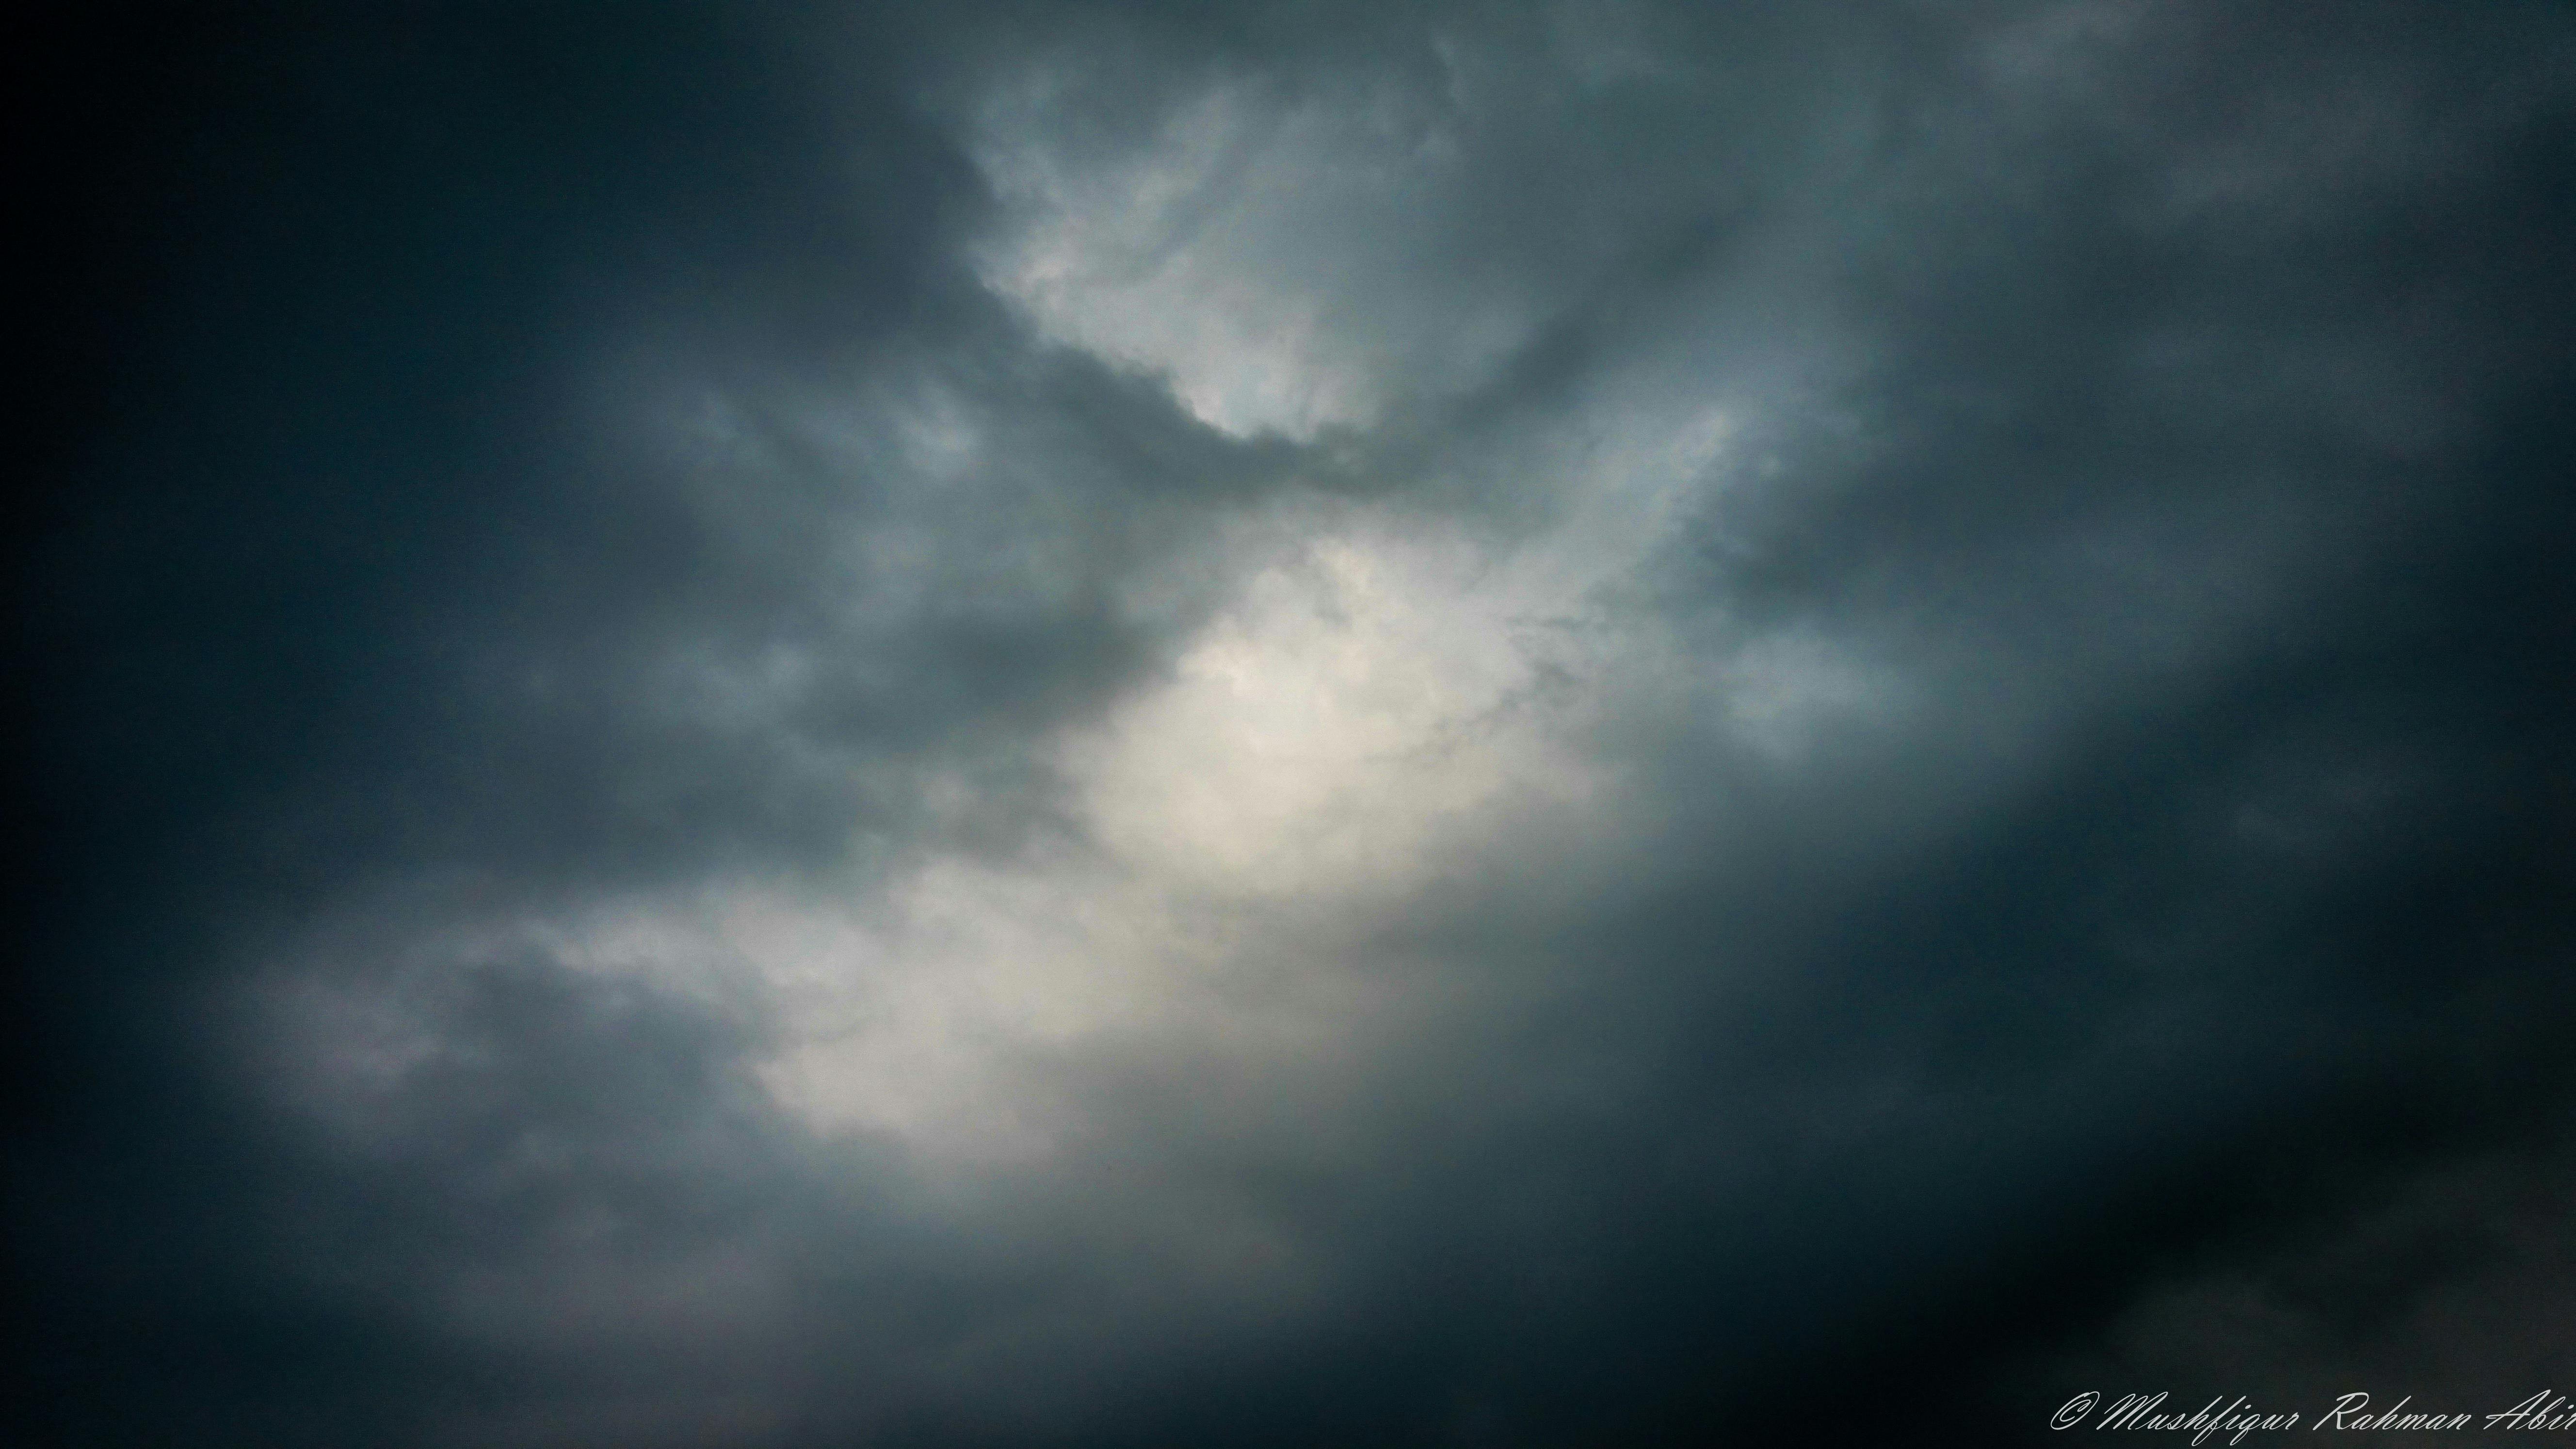 Free stock photo of Abir, cloudy sky, Mushfiqur Rahman Abir